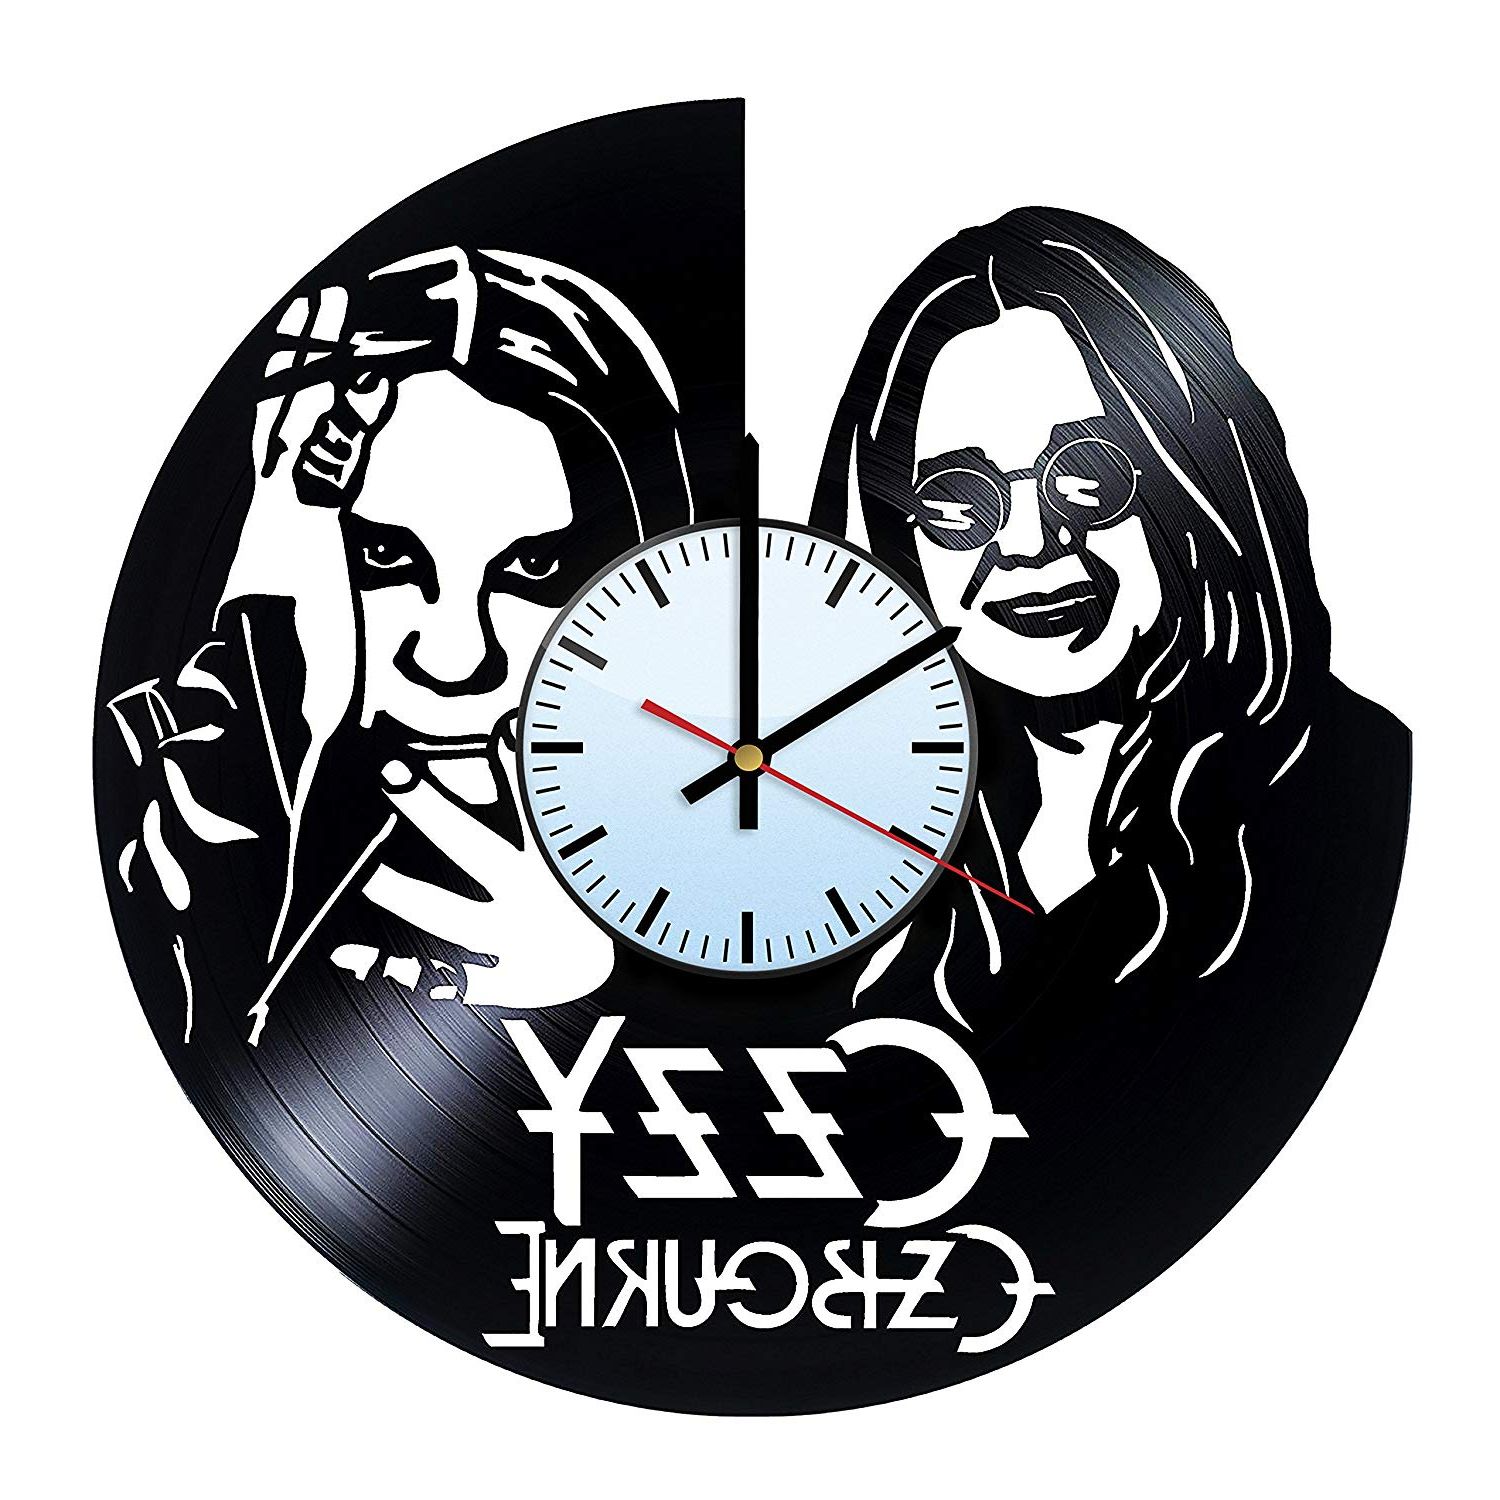 Preferred Osbourne Wall Decor Regarding Amazon: Baden Baden Ozzy Osbourne Vinyl Record Wall Clock – Get (View 7 of 20)